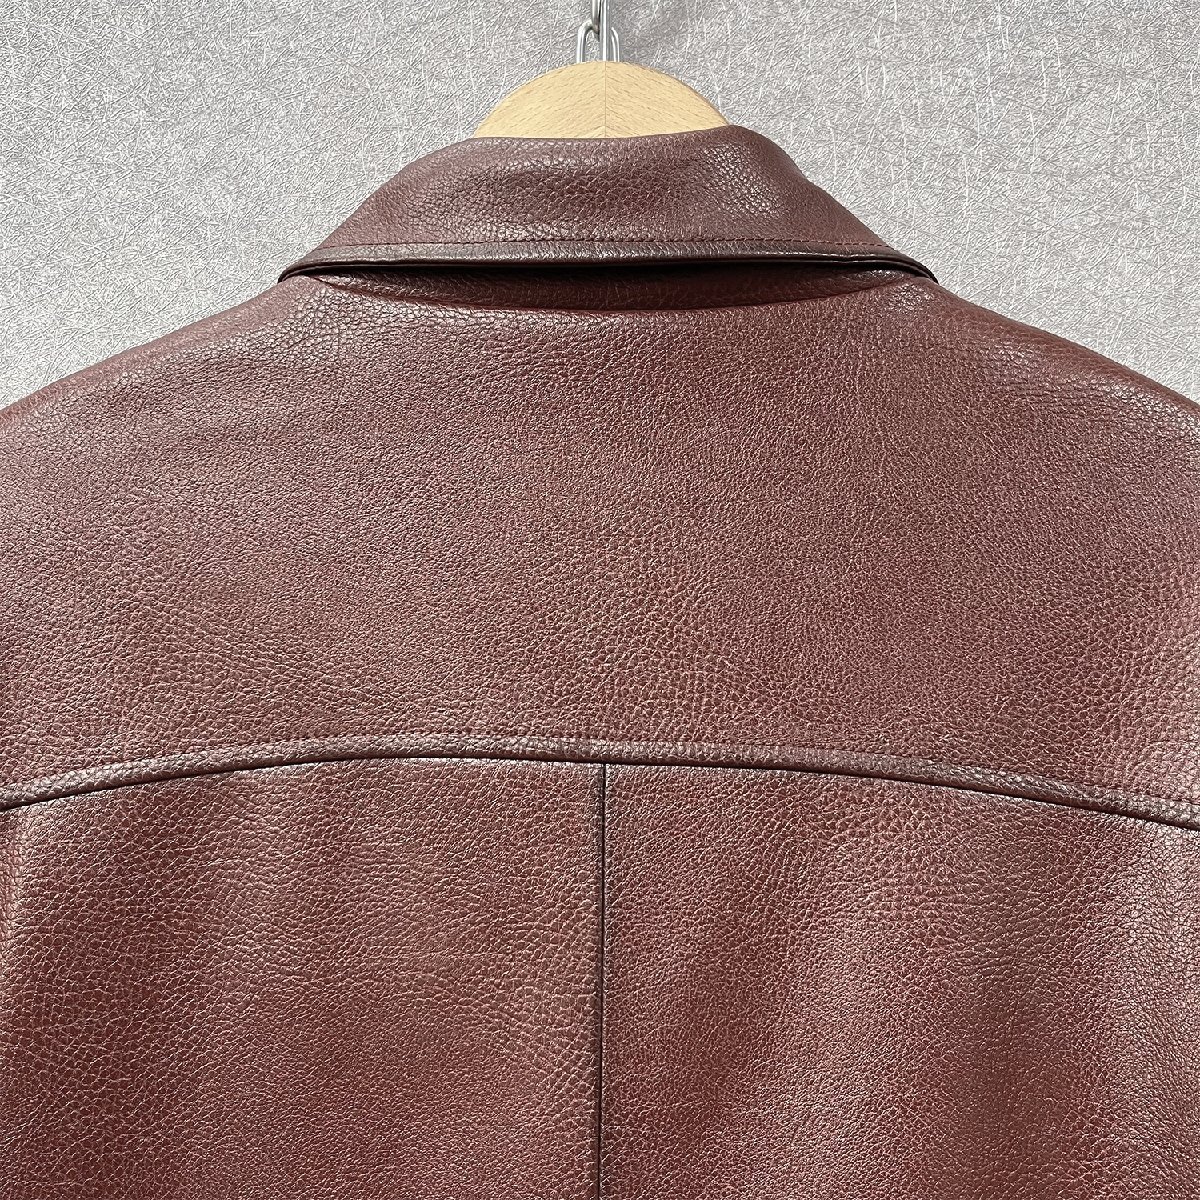  piece .* leather jacket regular price 13 ten thousand *Emmauela* Italy * milano departure * fine quality sheep leather sheepskin thin Rider's soft leather jacket L/48 size 